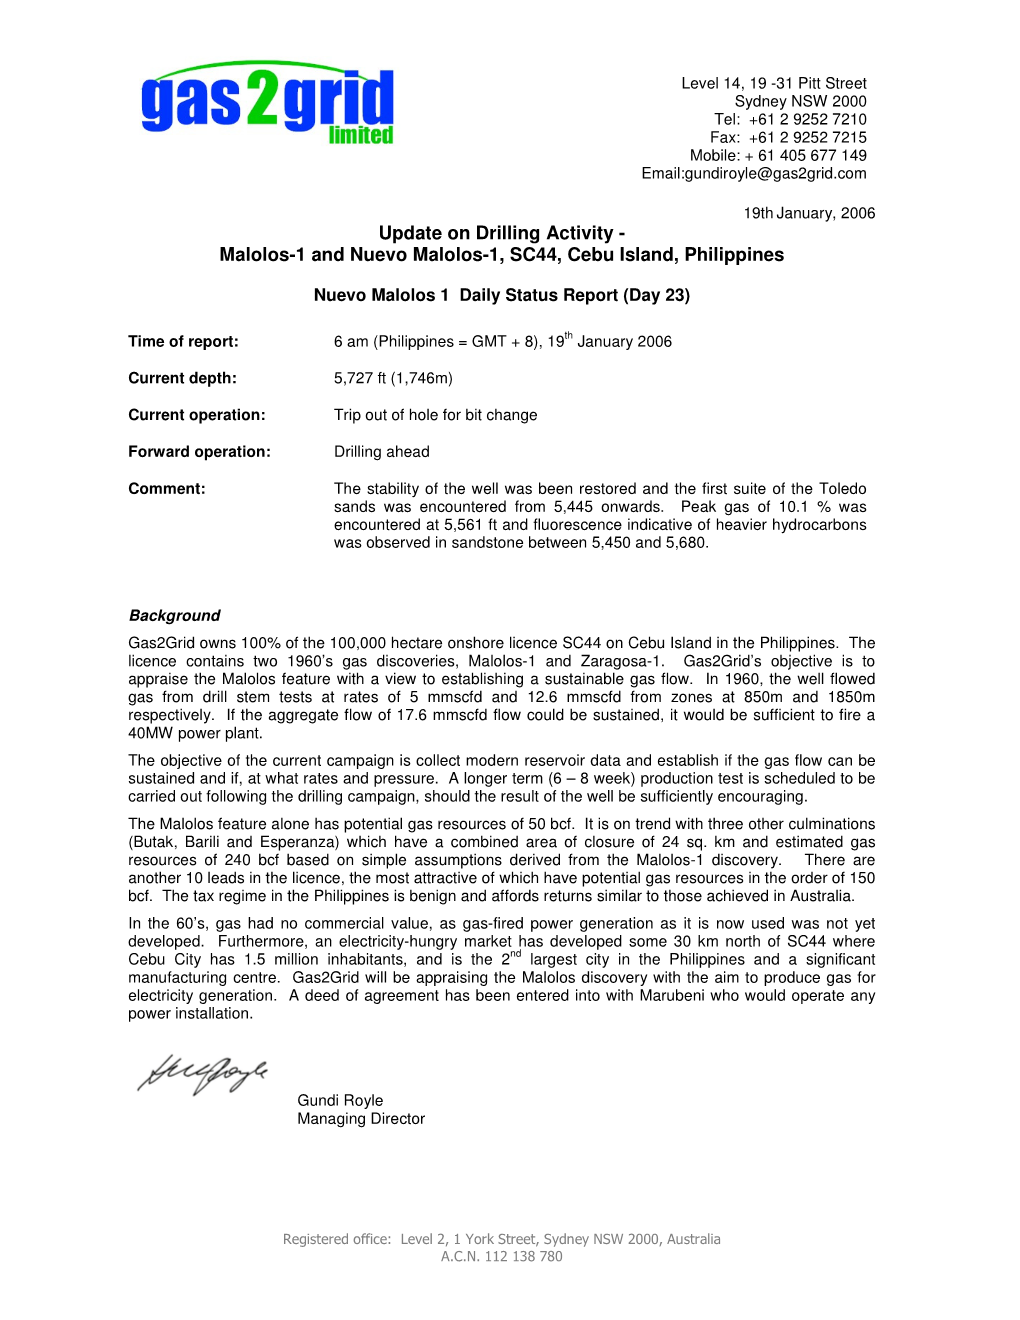 Update on Drilling Activity - Malolos-1 and Nuevo Malolos-1, SC44, Cebu Island, Philippines